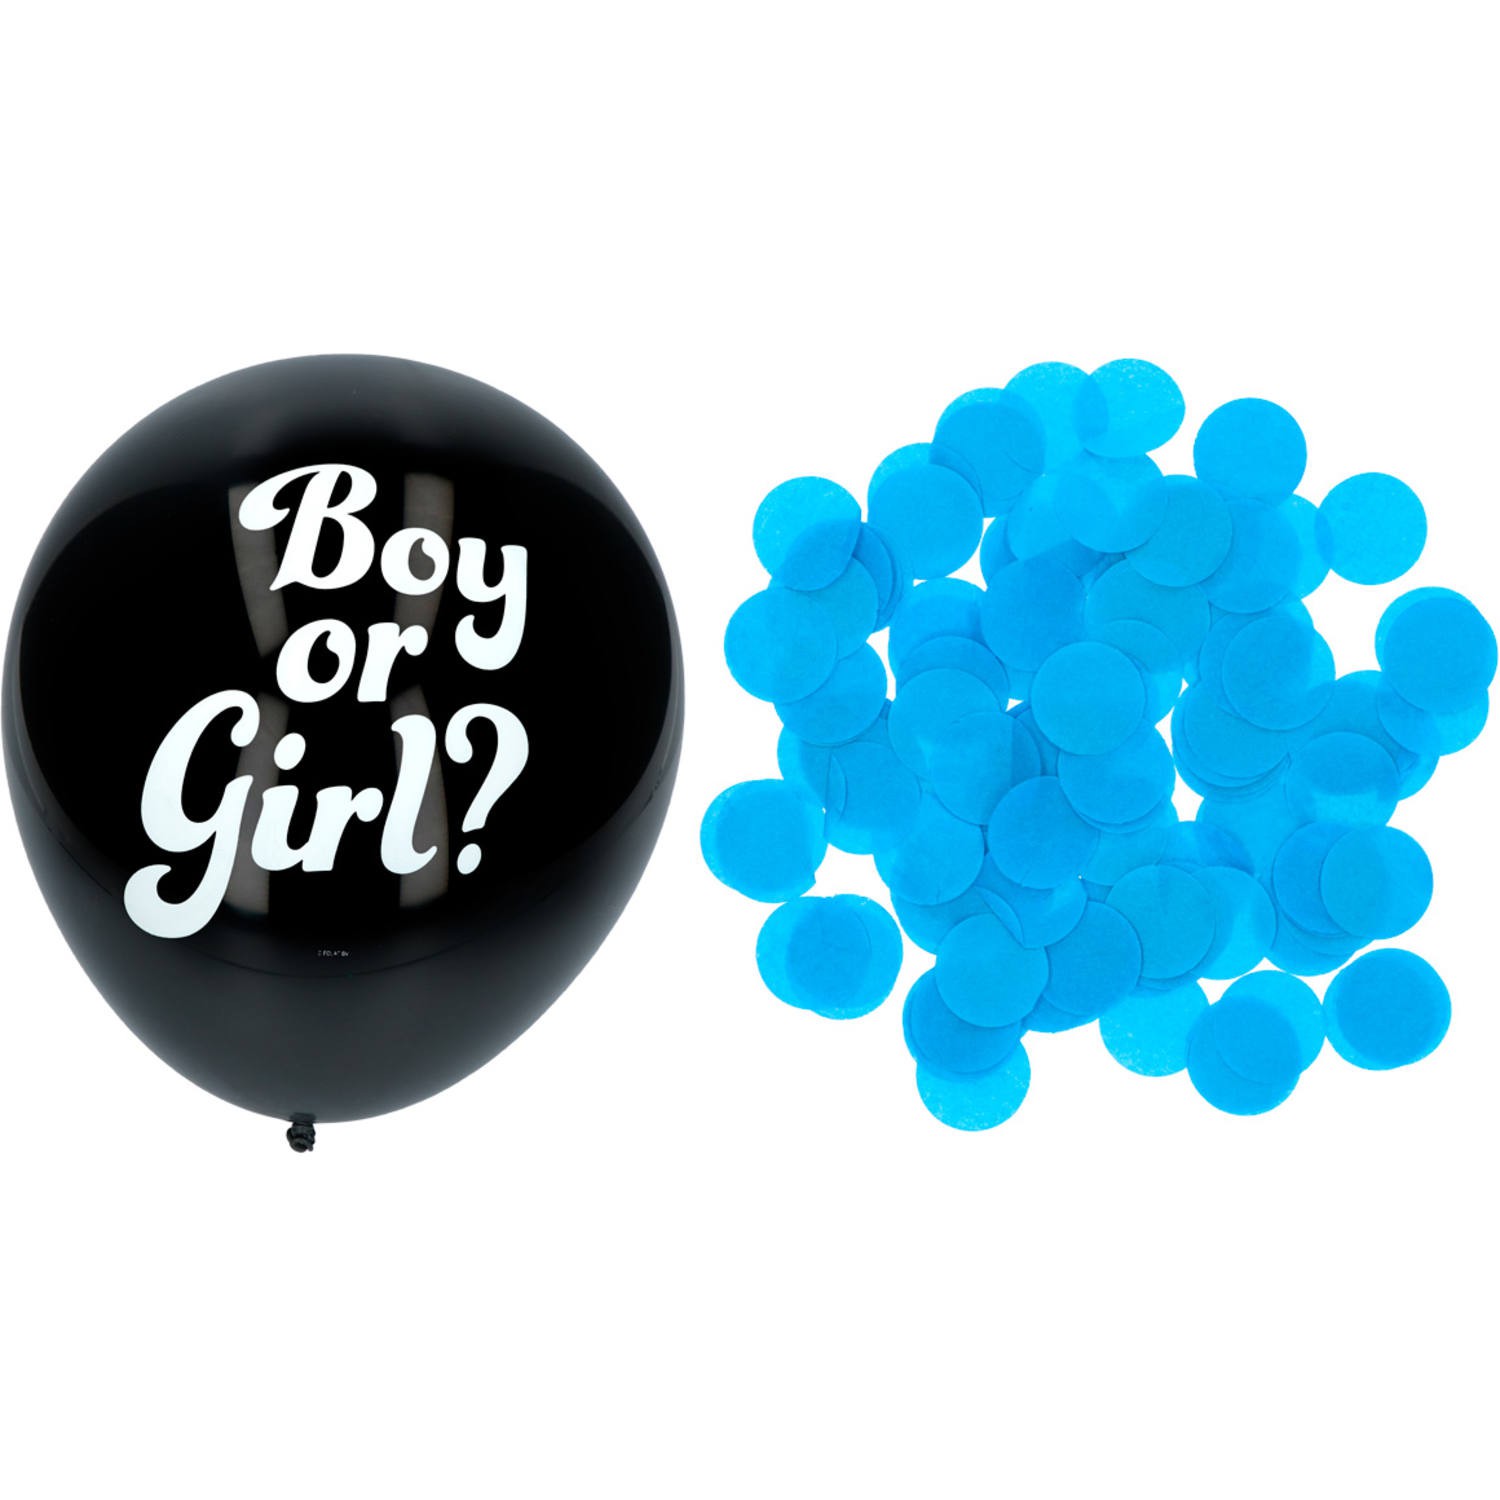 Ambiance Ballons Charleroi - Ballon « Gender Reveal Party » pour